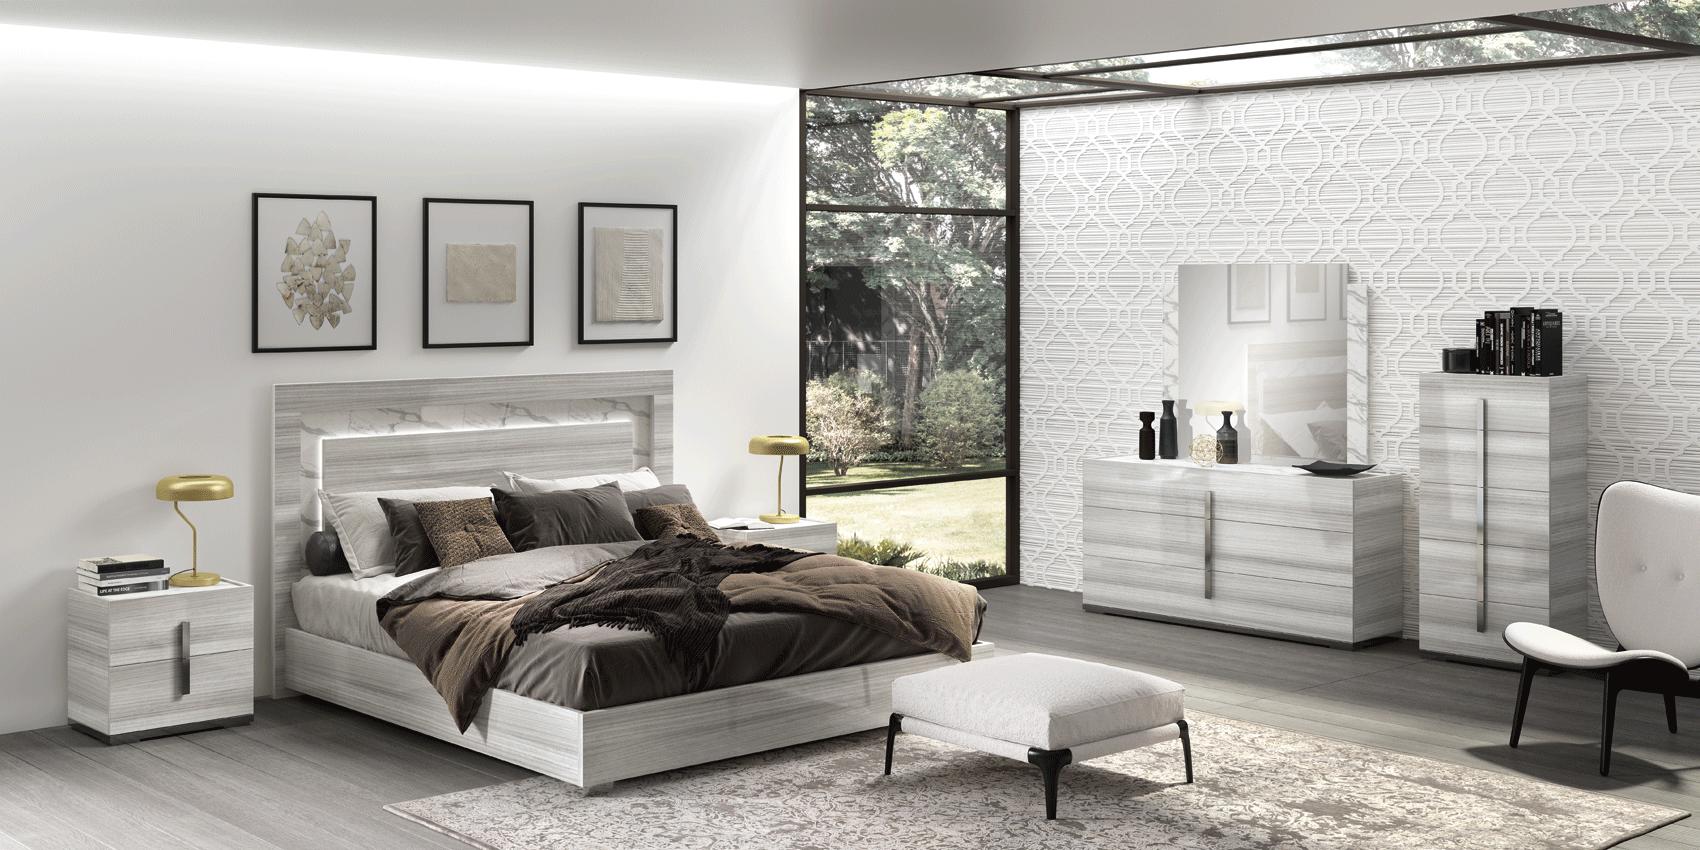 Contemporary, Modern Platform Bedroom Set CARRARABEDQSGREY CARRARABEDKSGREY-2NDMC-6PC in Gray 